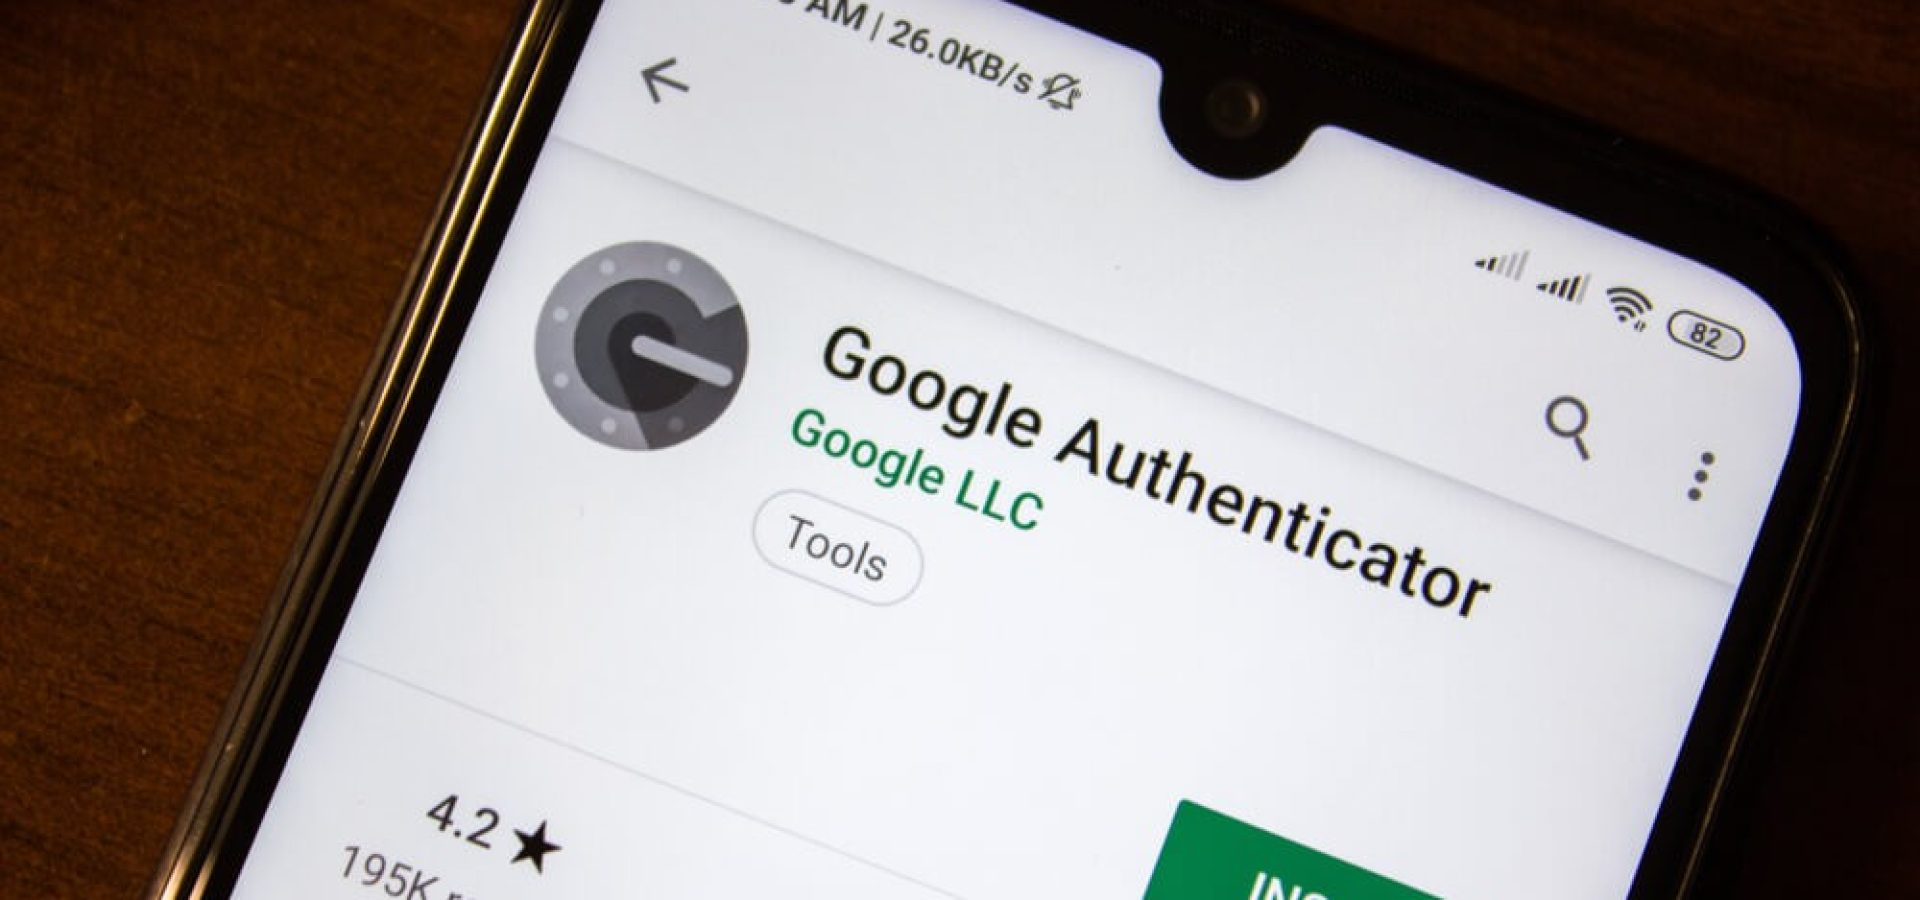 Google Authenticator app on the display of smartphone